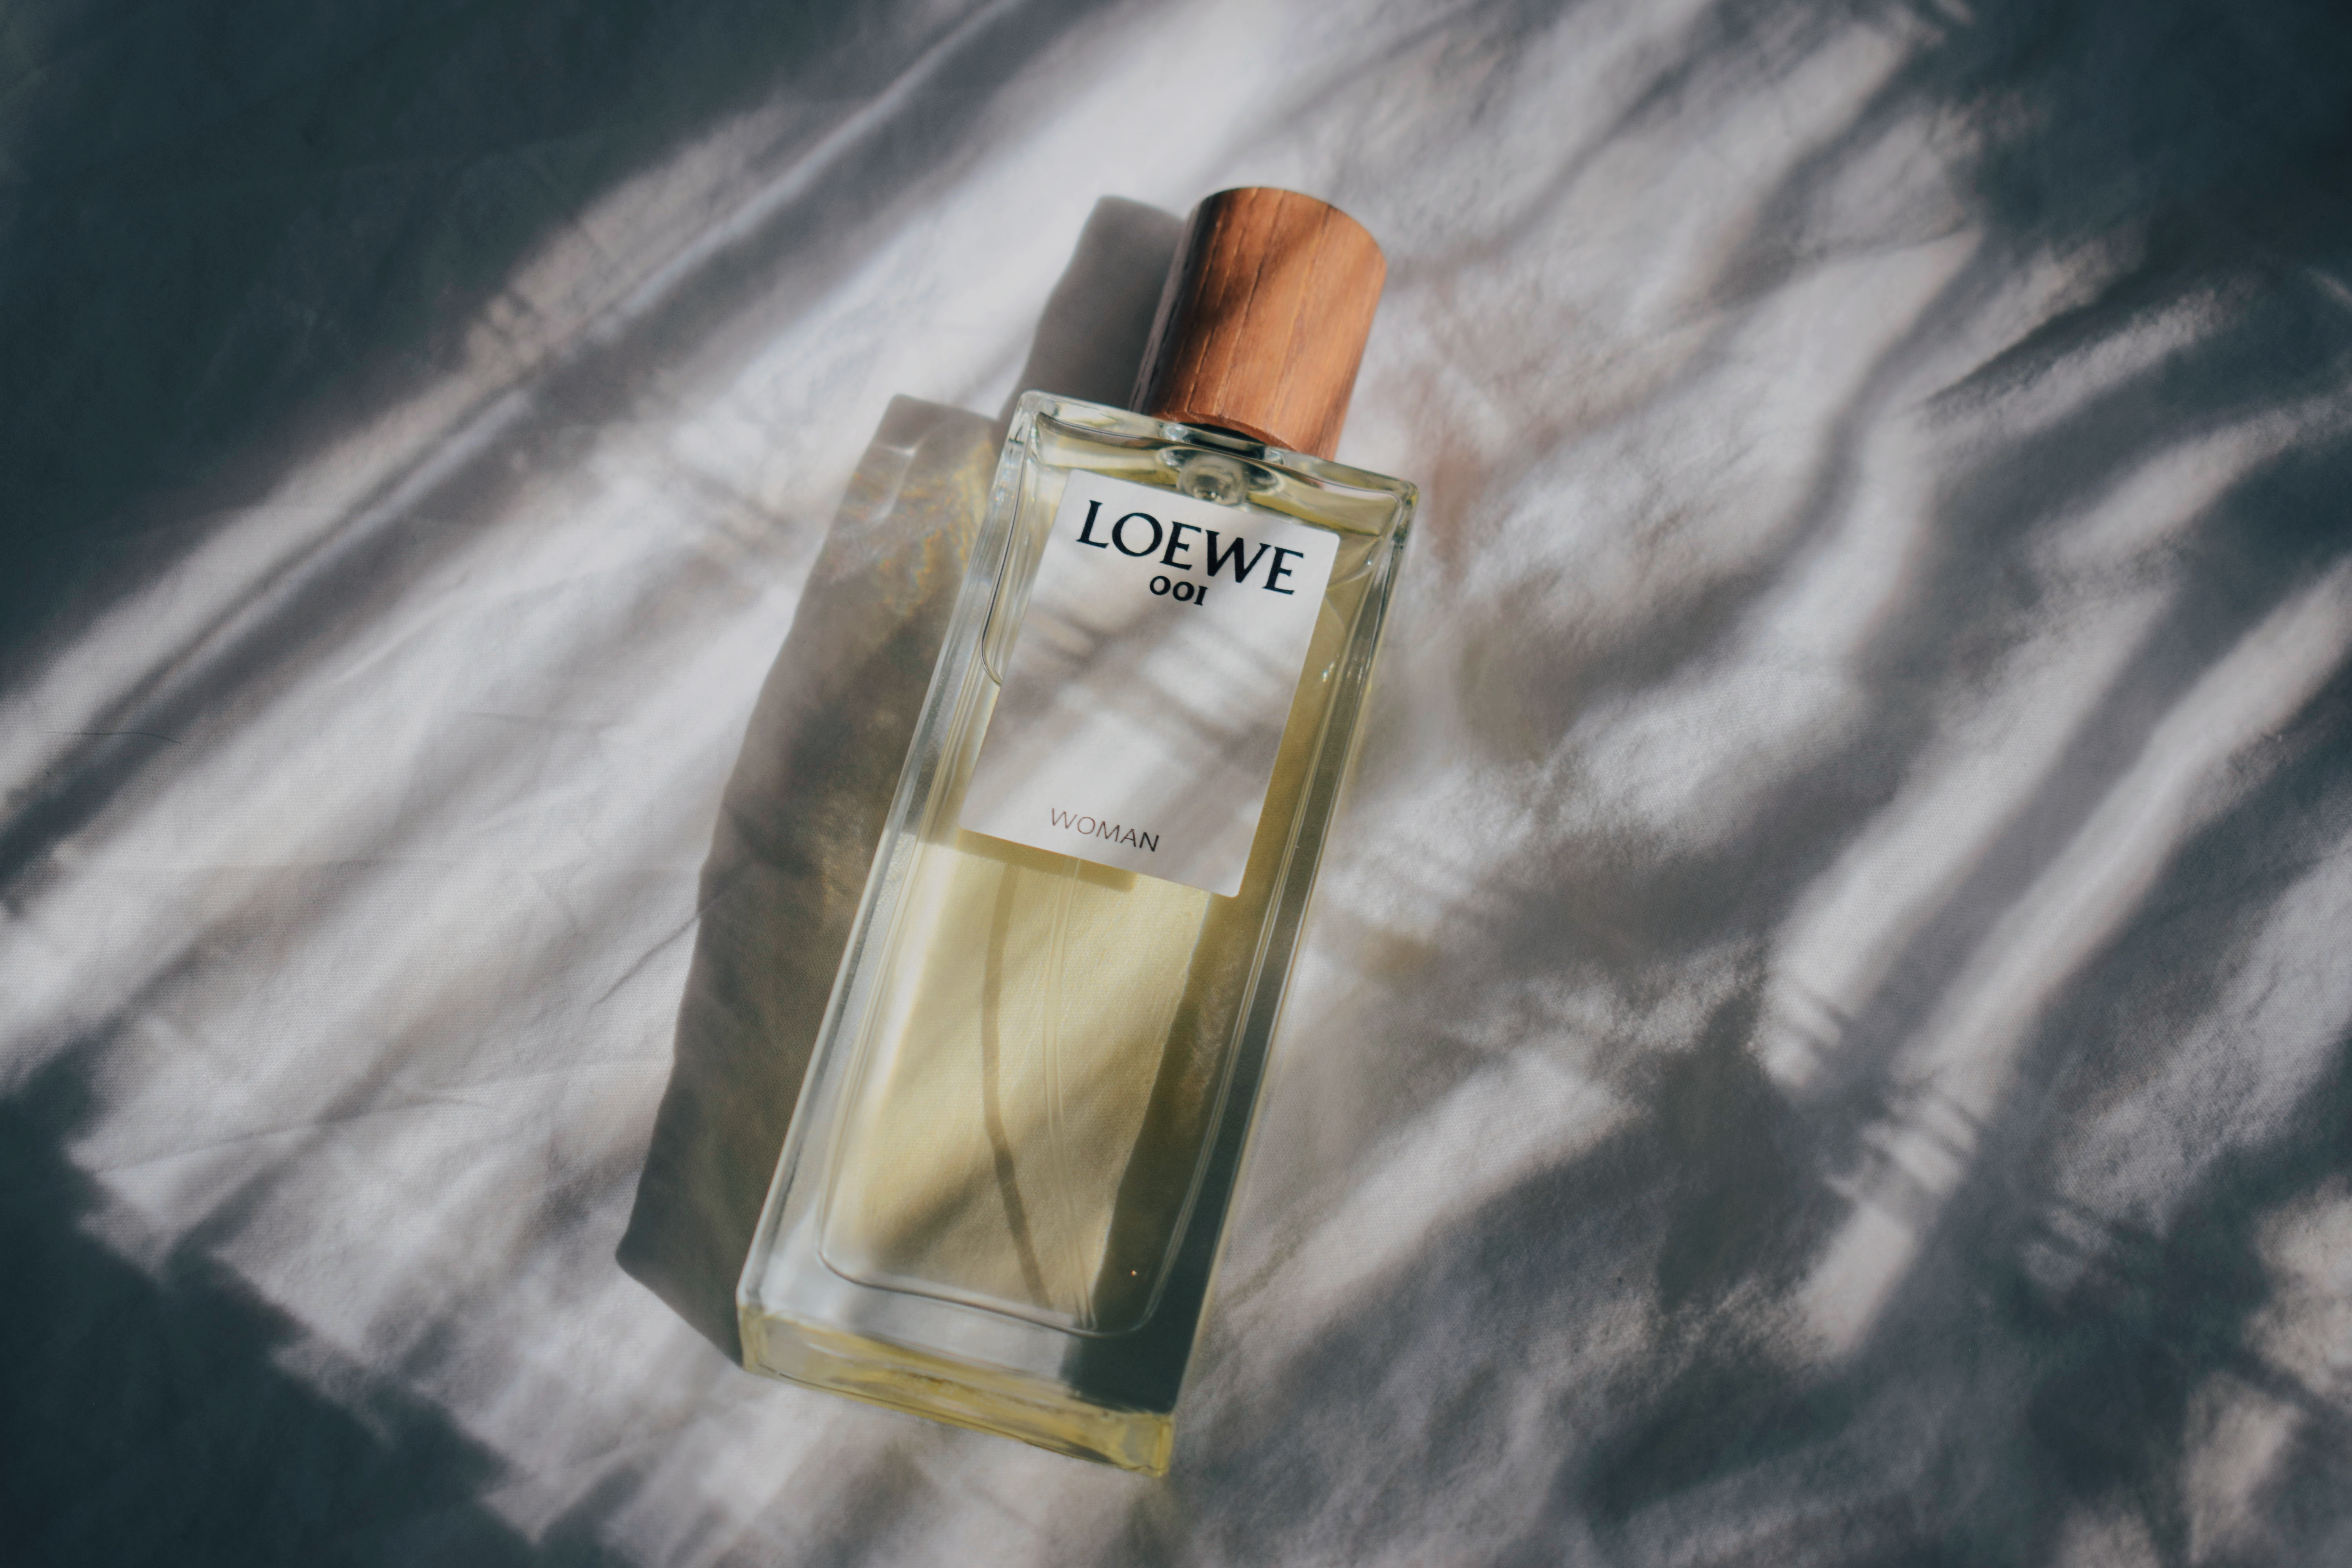 loewe perfume 001 woman